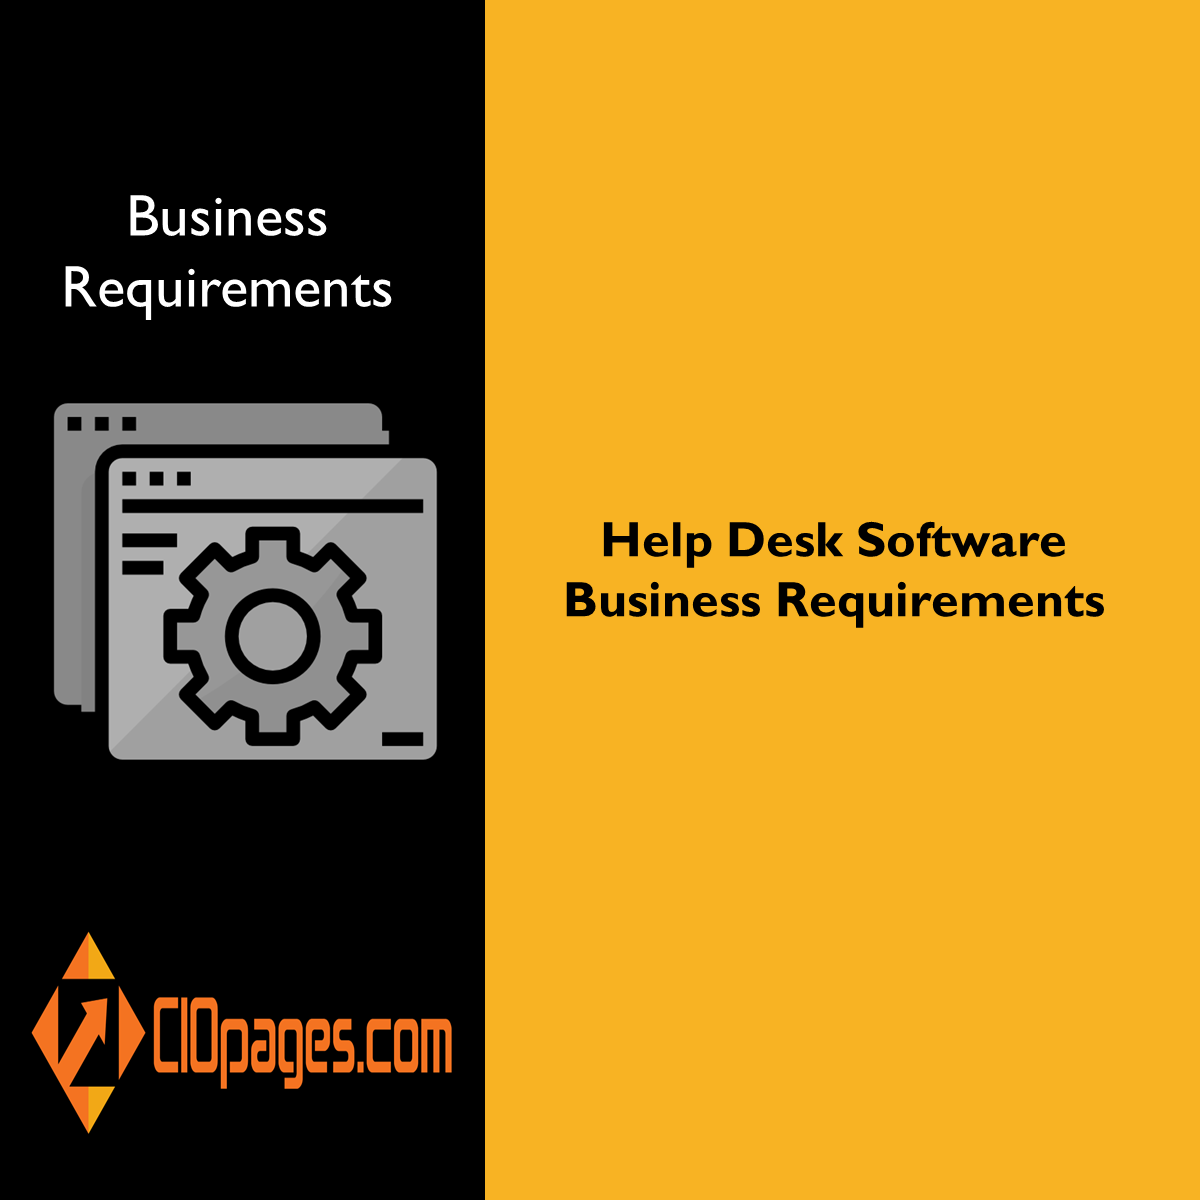 Help Desk Software Business Requirements